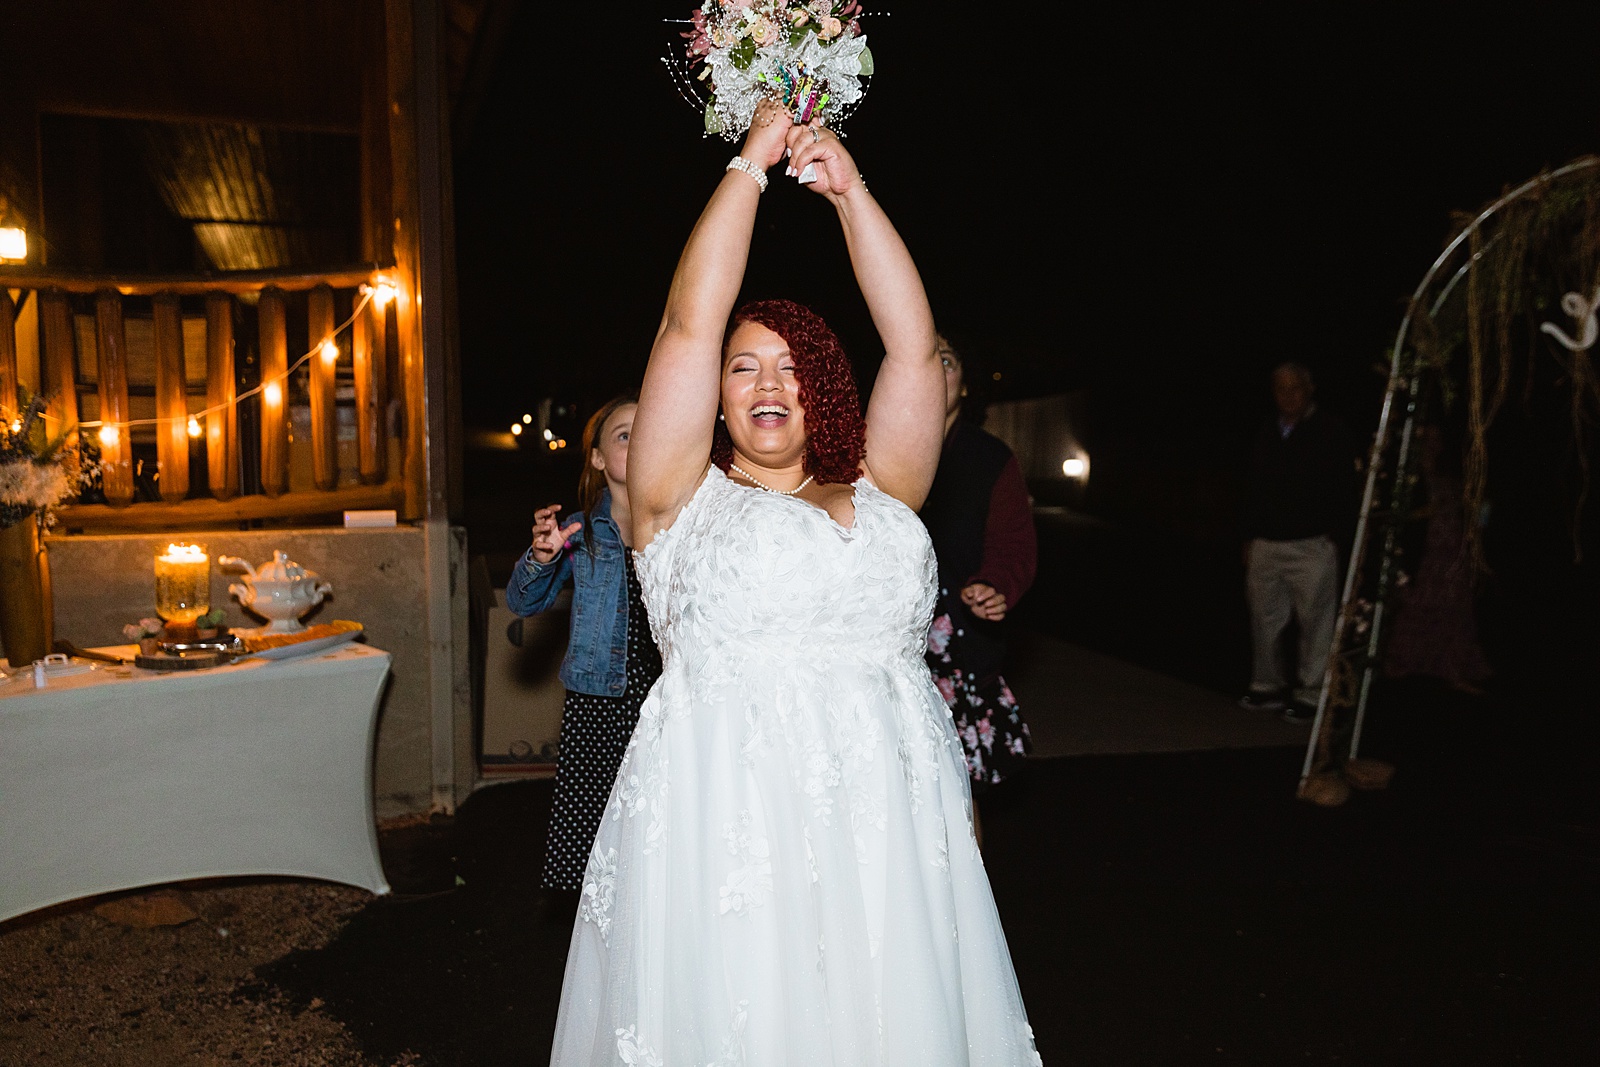 Bouquet toss at Mogollon Rim wedding reception by Northern Arizona wedding photographer PMA Photography.